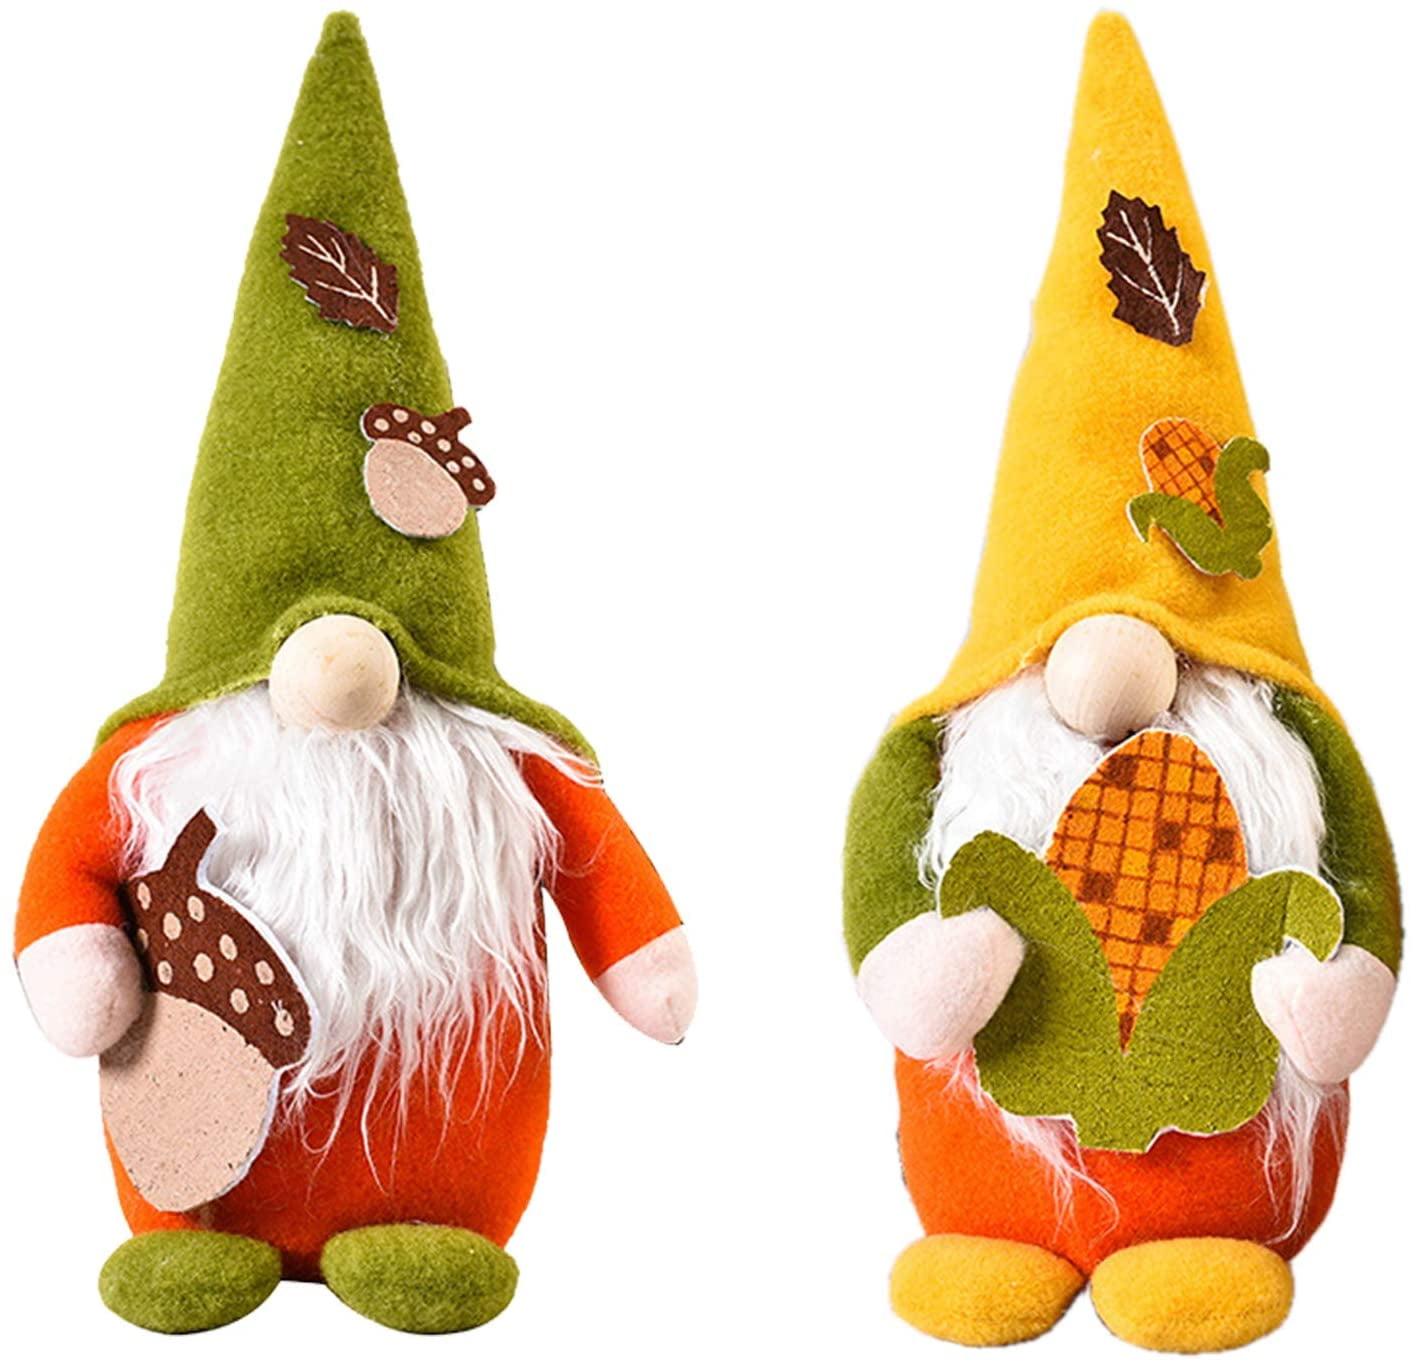 gnomes stuffed